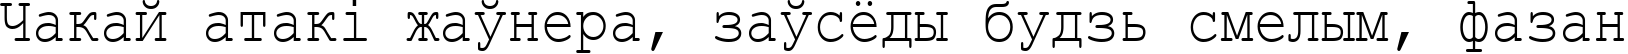 Пример написания шрифтом Courier New Cyr_85n текста на белорусском